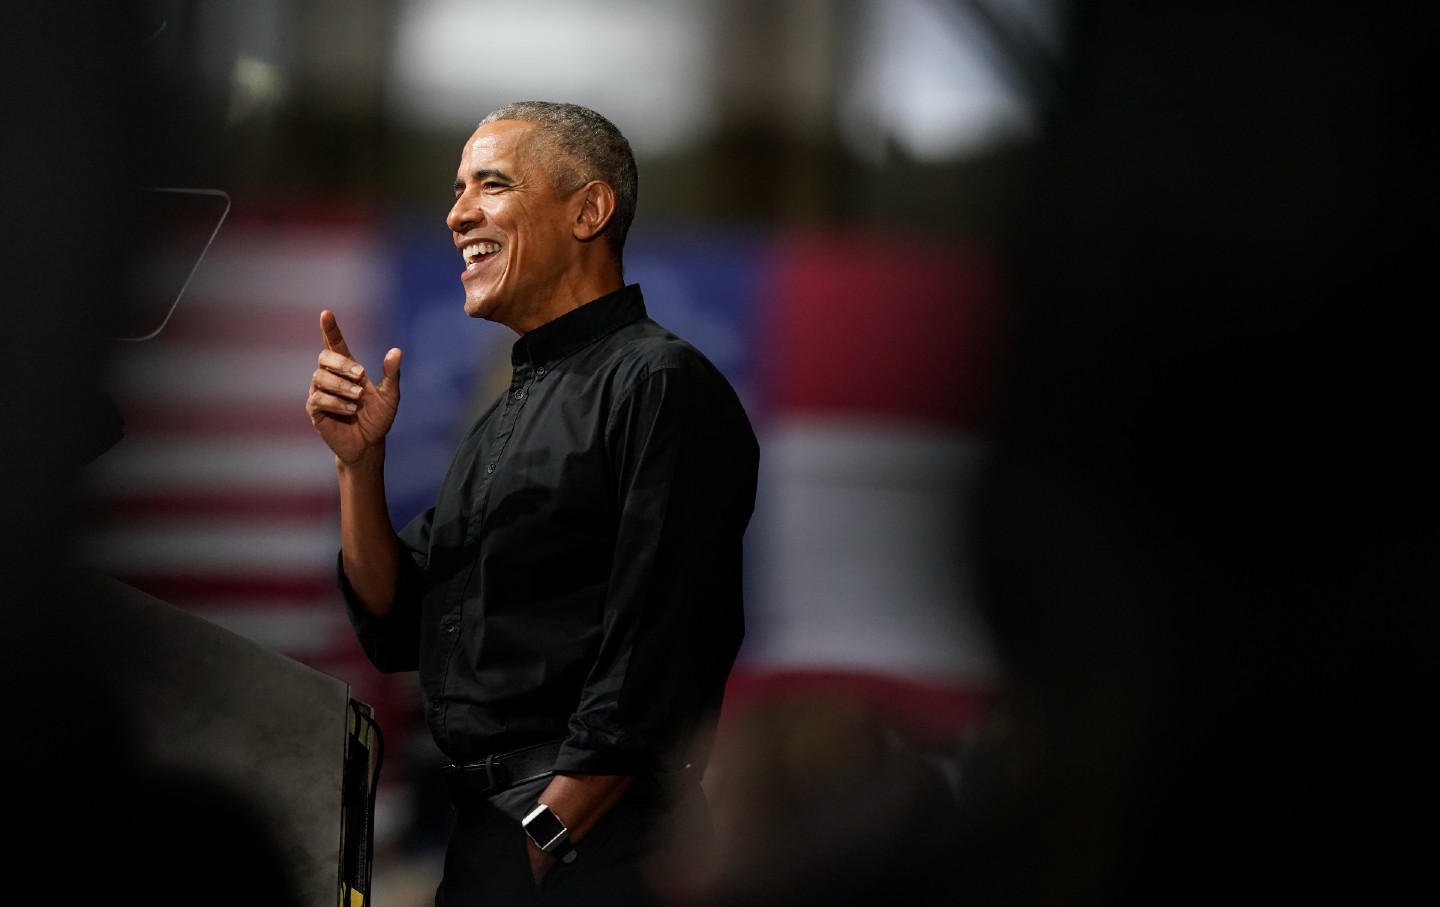 Barack Obama smiling and speaking at an Atlanta rally in support of Senator Raphael Warnock.